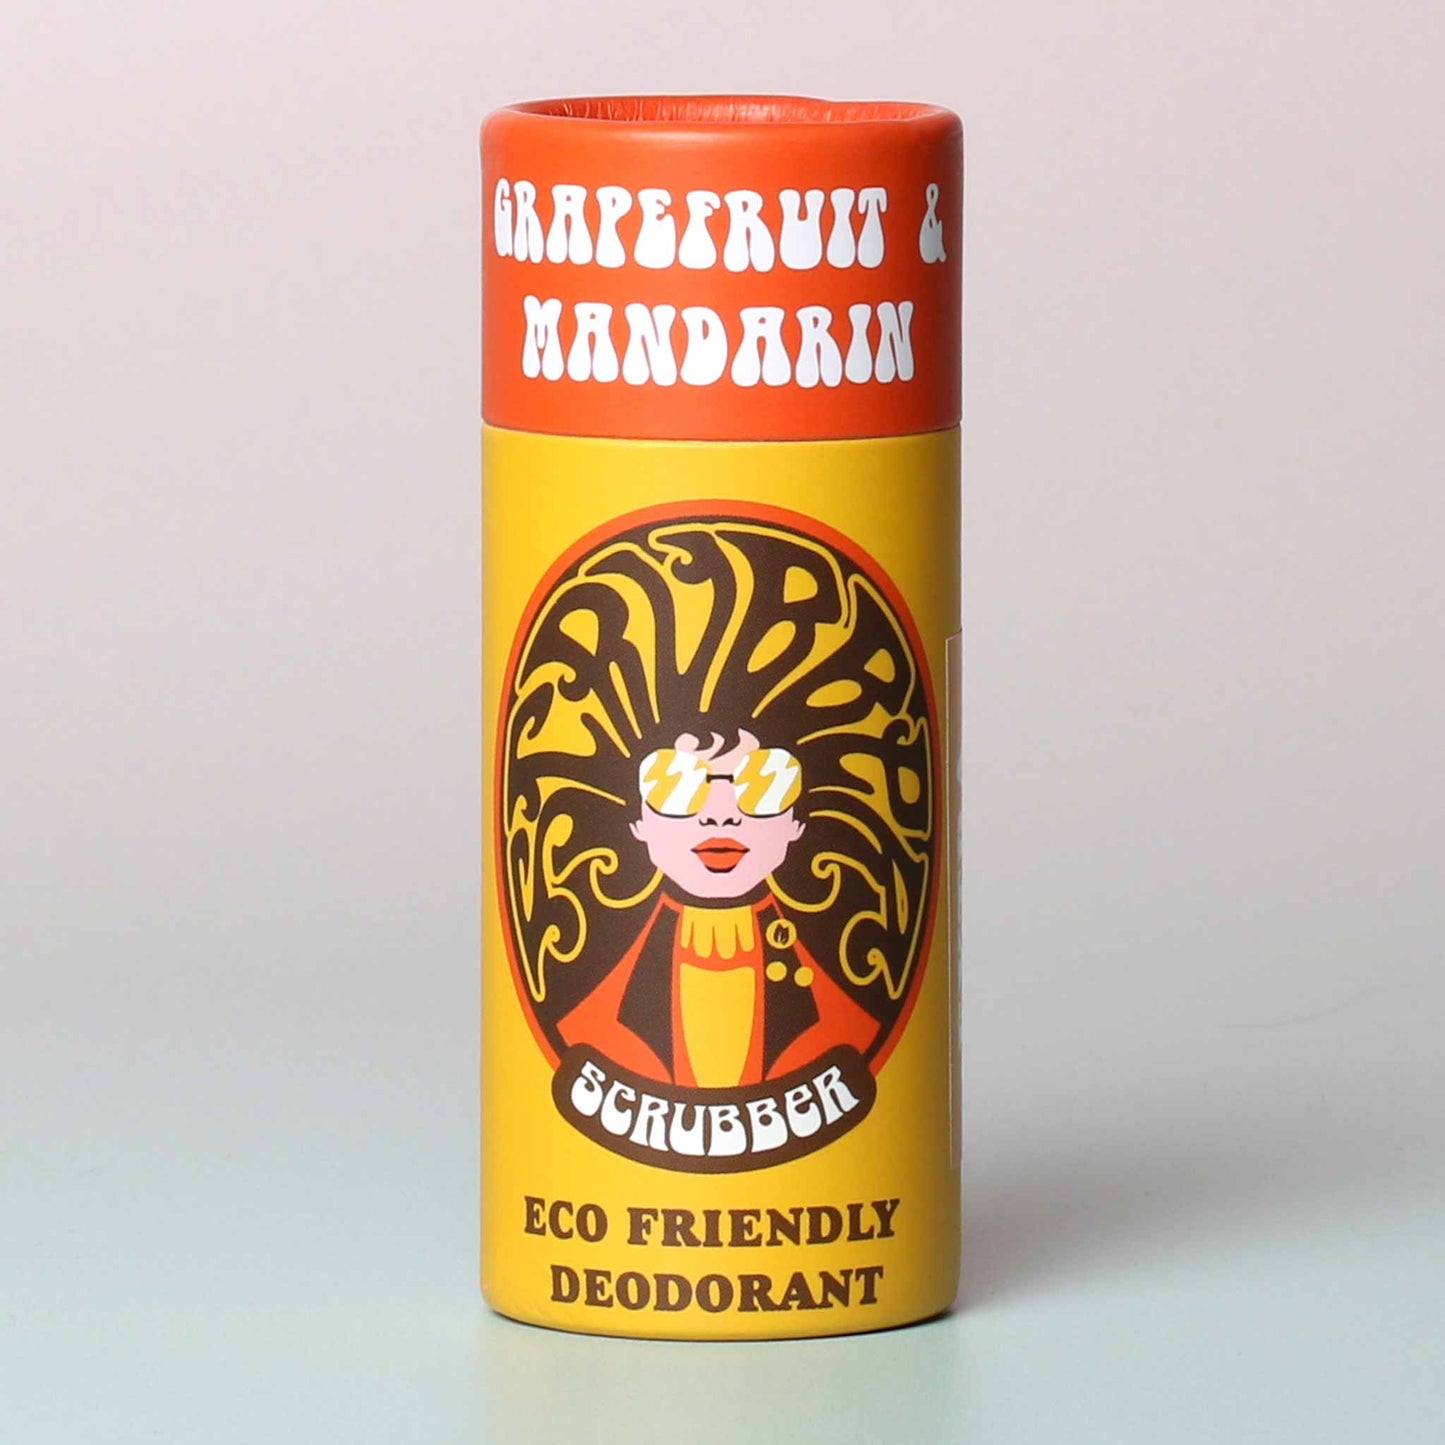 Scrubber Grapefruit & Mandarin Deodorant